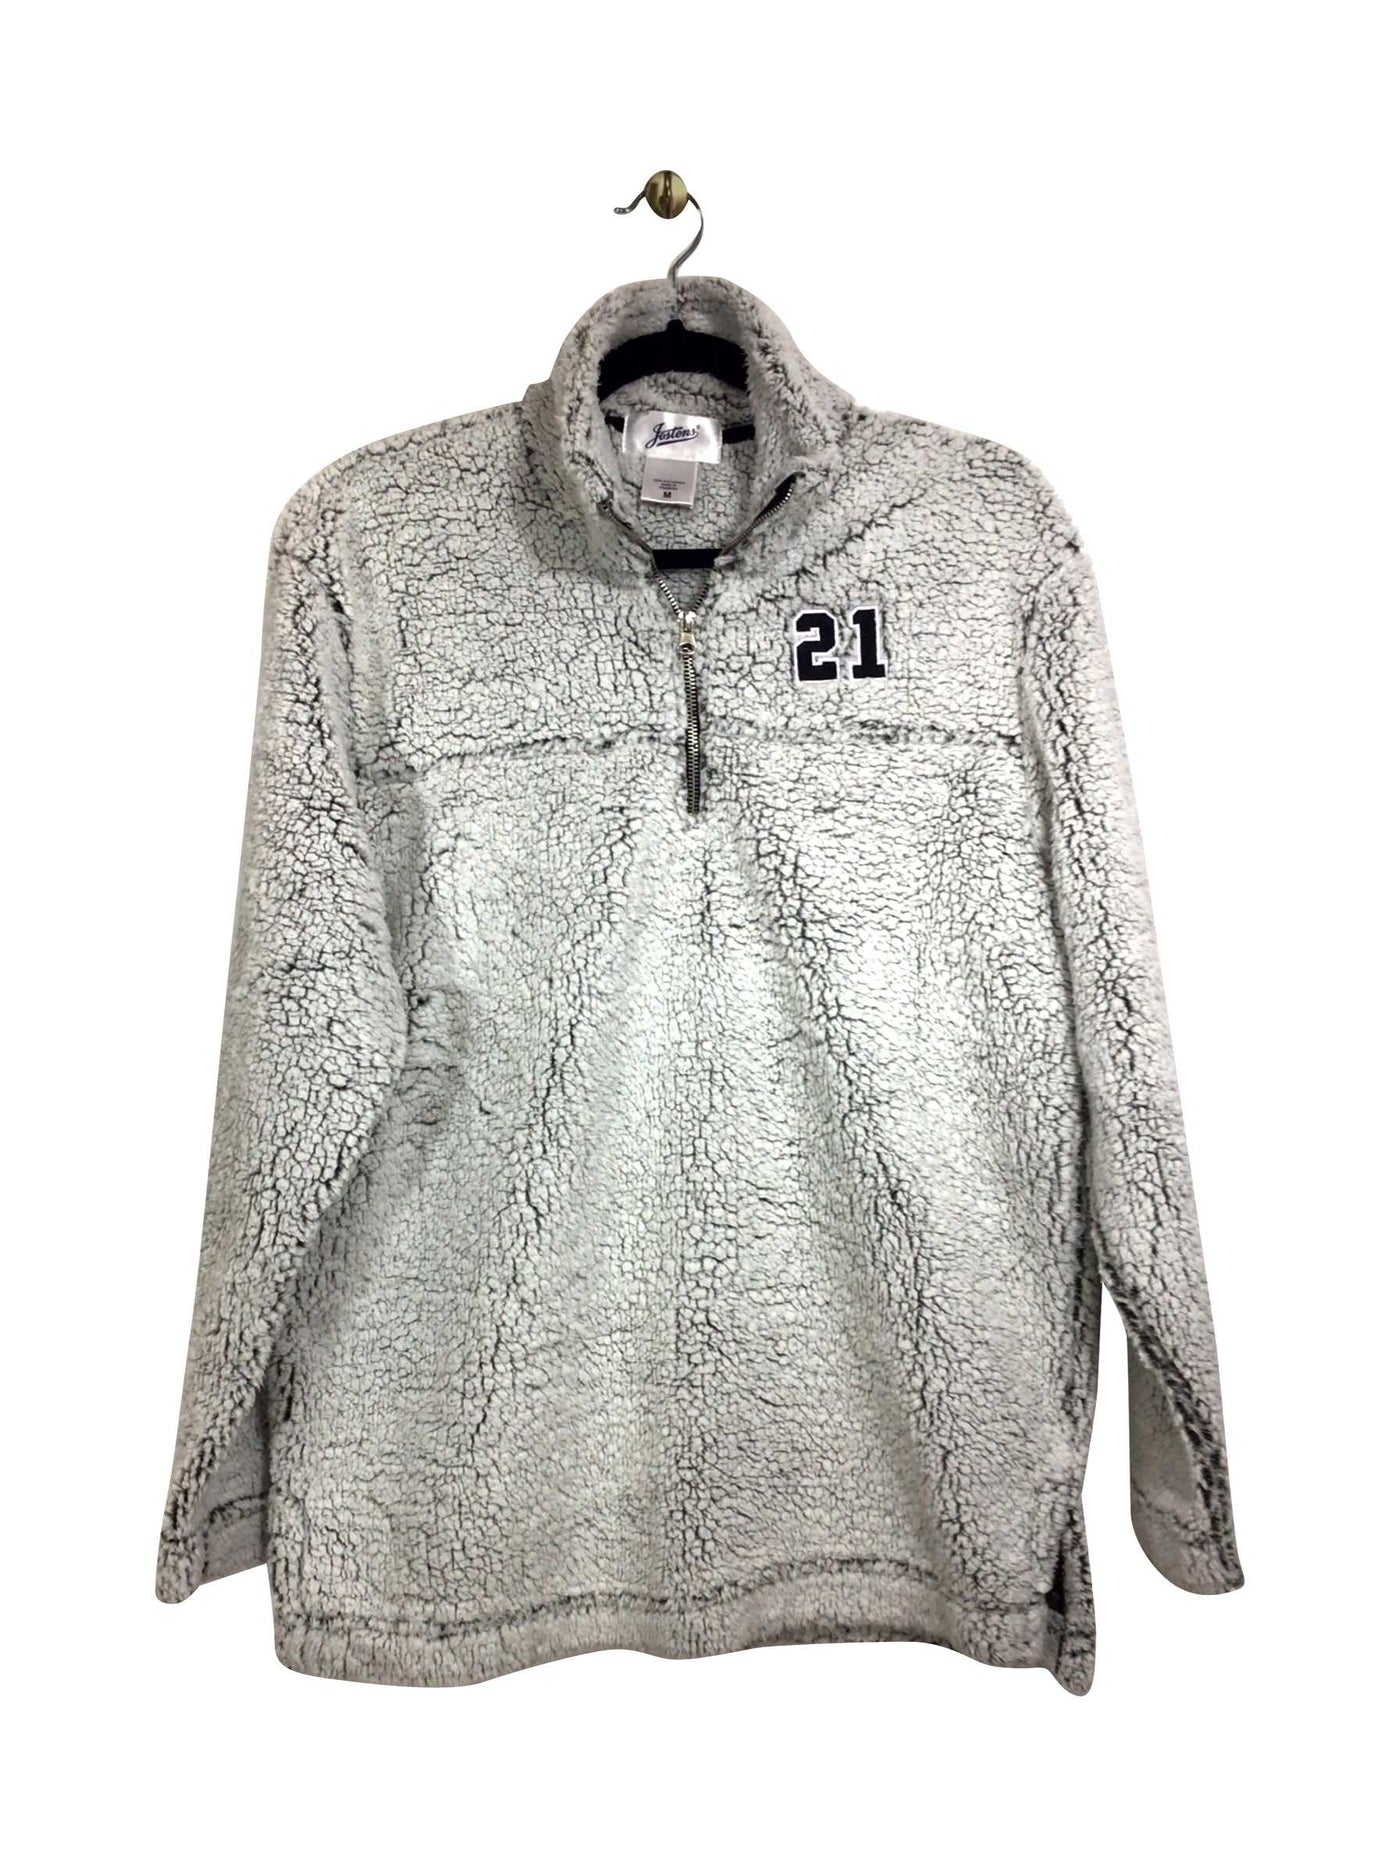 UNBRANDED Regular fit Sweatshirt in Gray - Size M | 8.99 $ KOOP